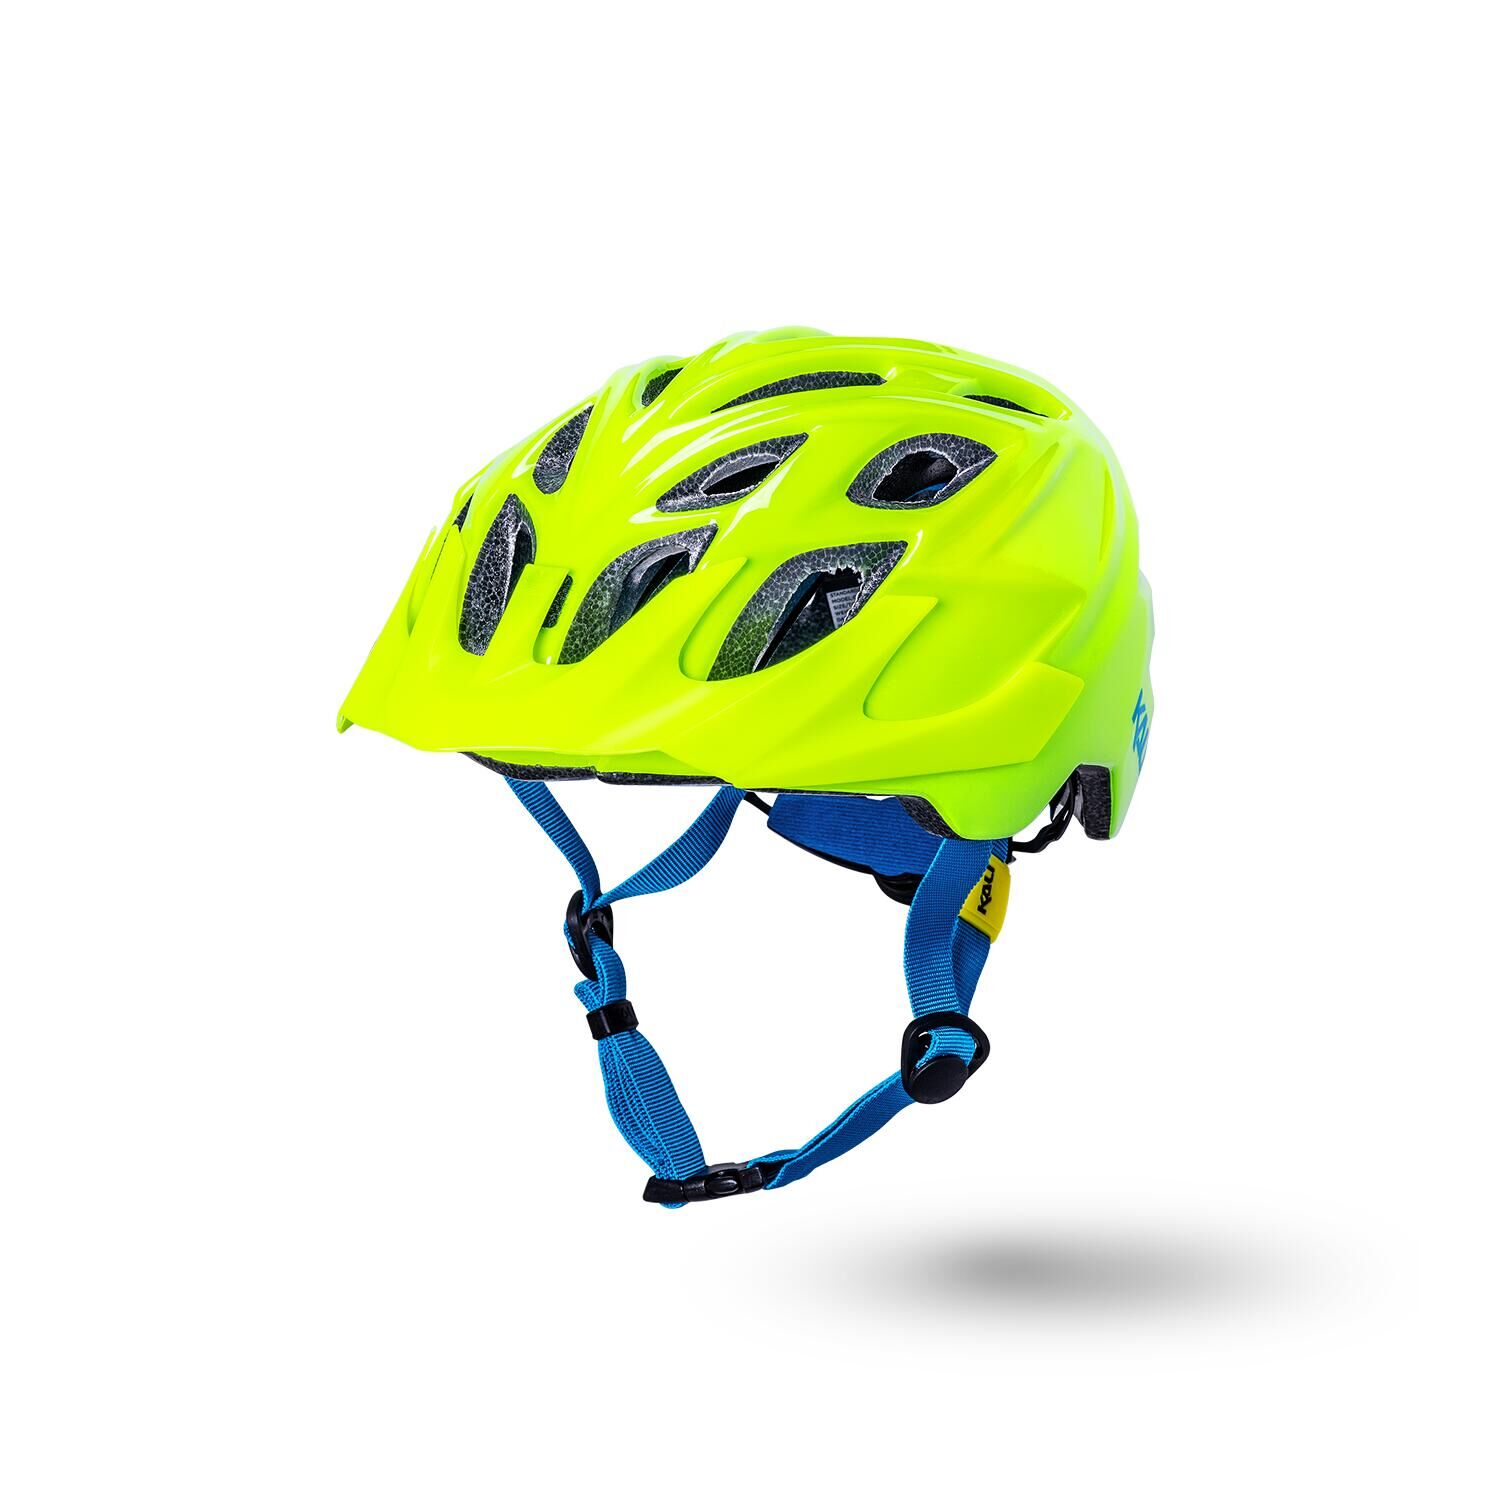 KALI Kali Chakra Youth Helmet - Solid Gloss Neon Yellow